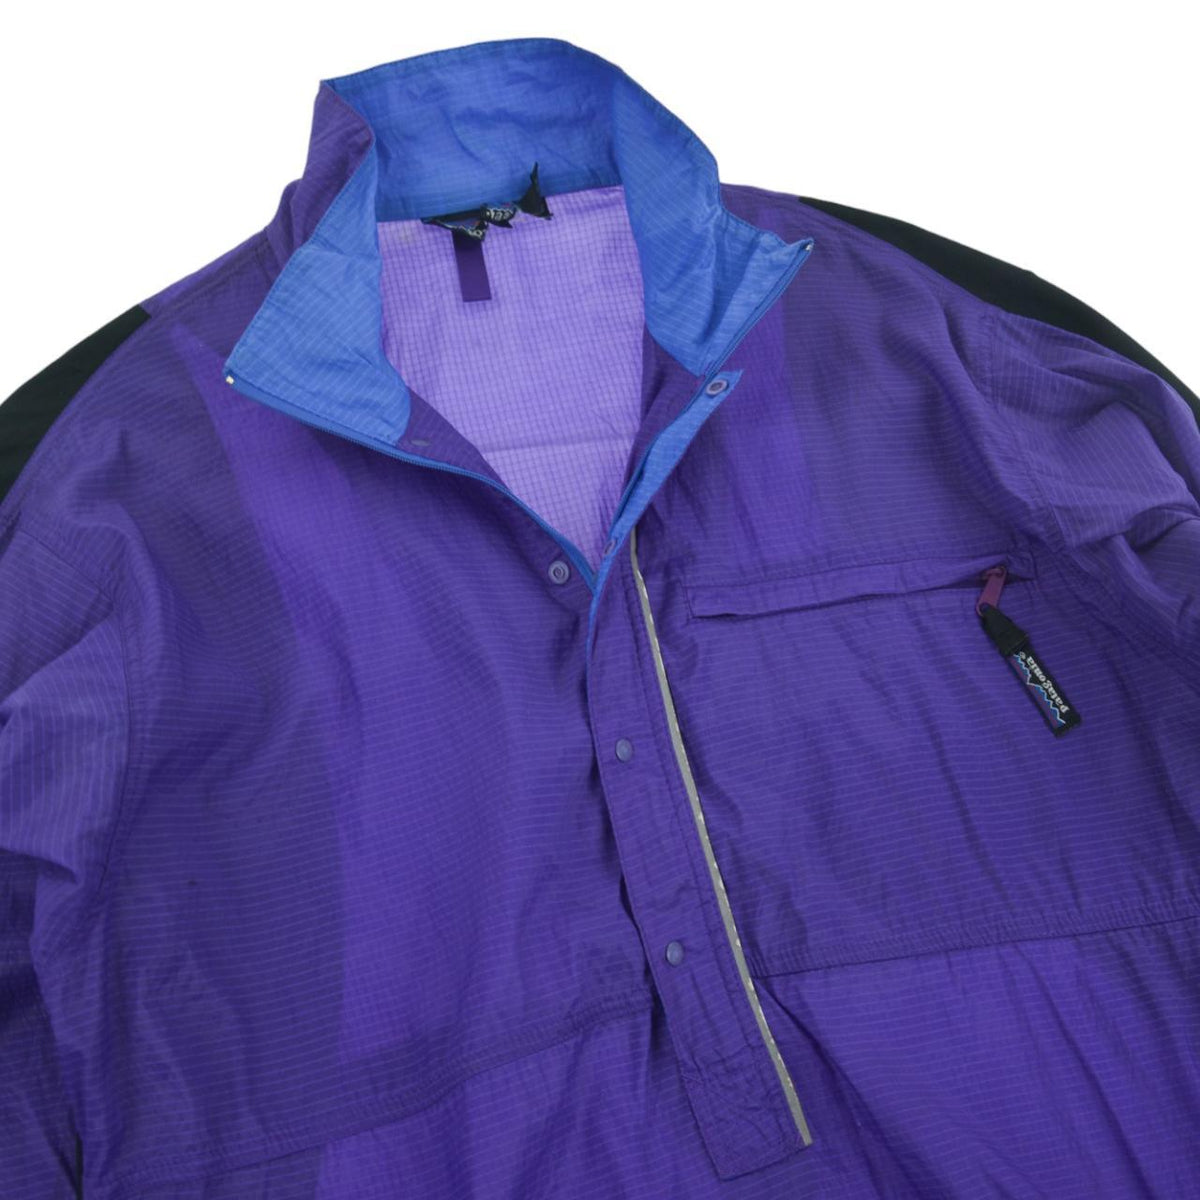 Vintage Patagonia Grid Jacket Size M